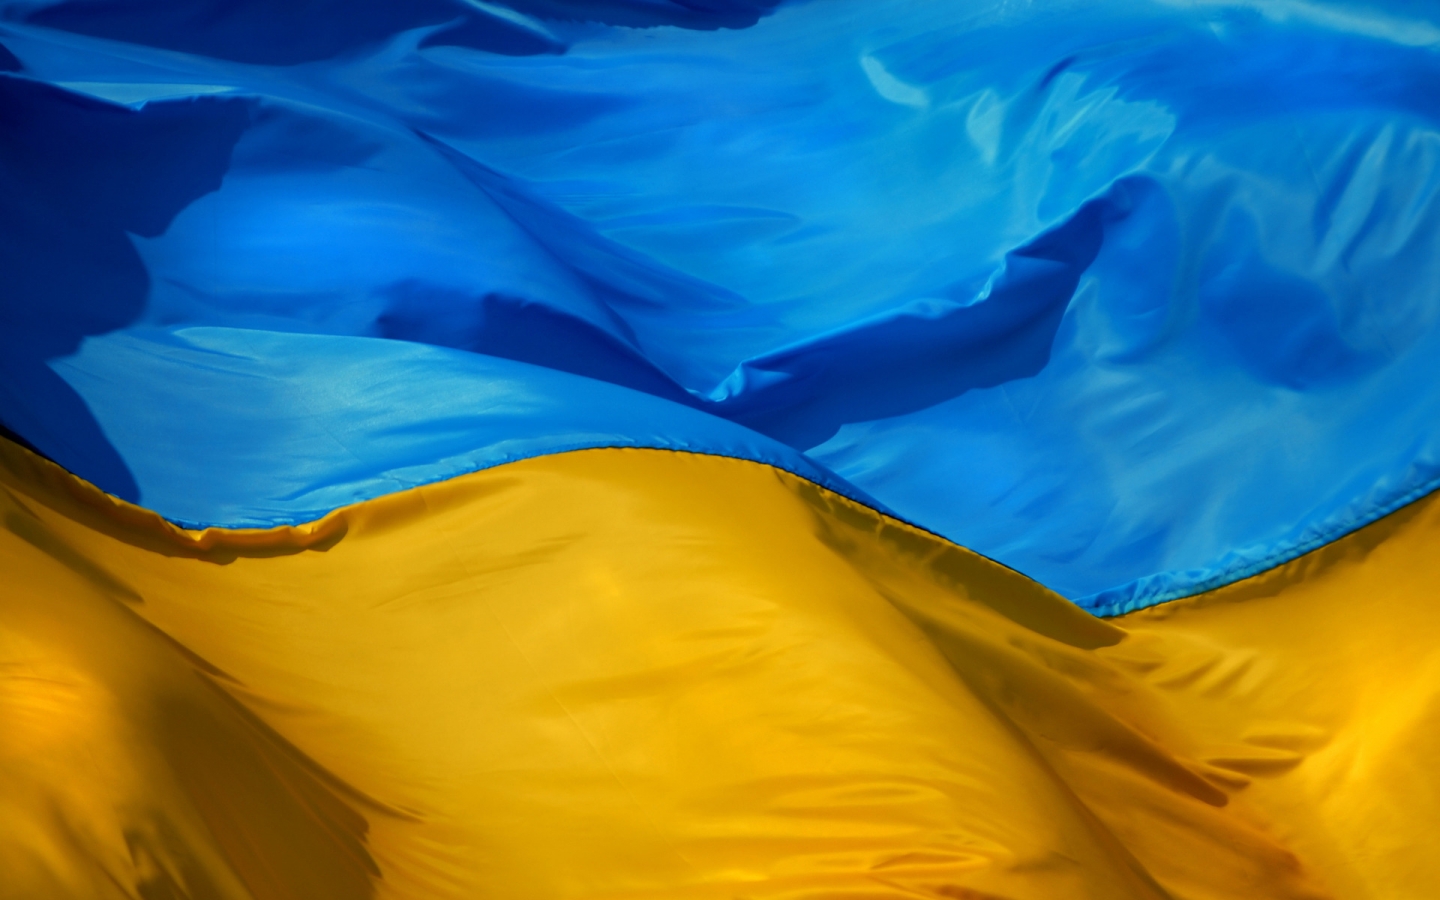 Ukraine Flag for 1440 x 900 widescreen resolution